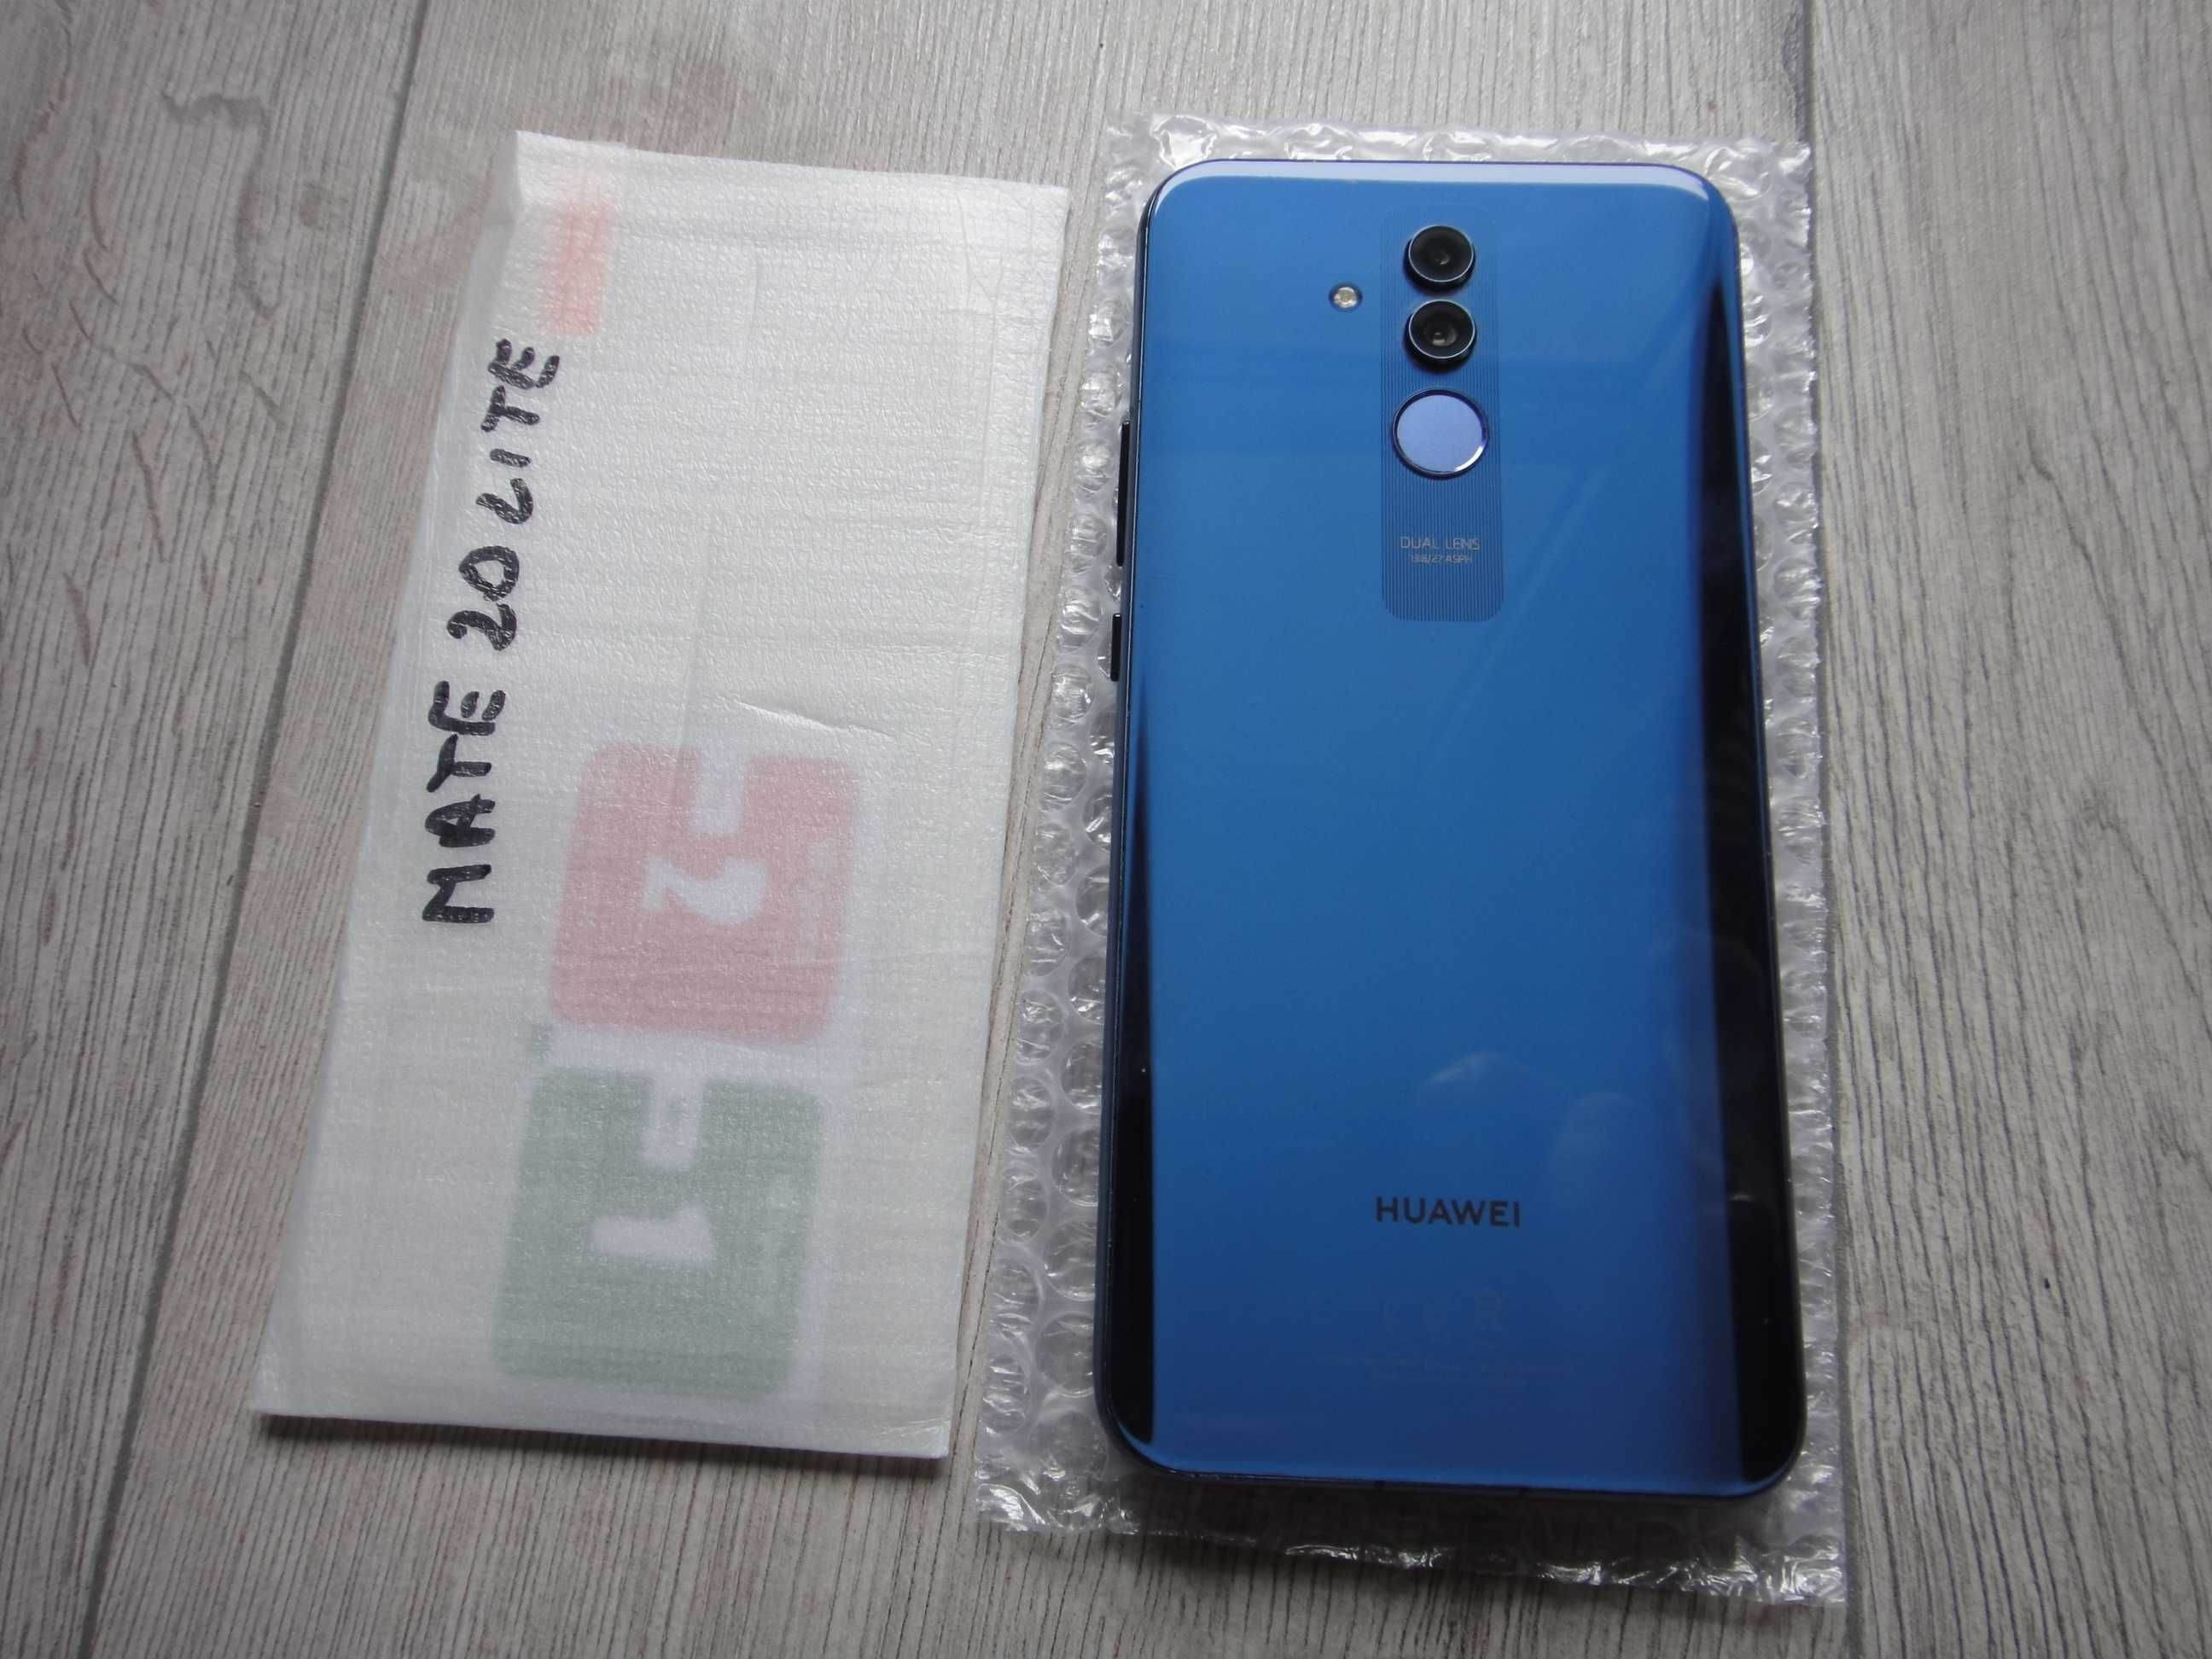 Huawei Mate 20 Lite SNE-LX1 64/4Gb.